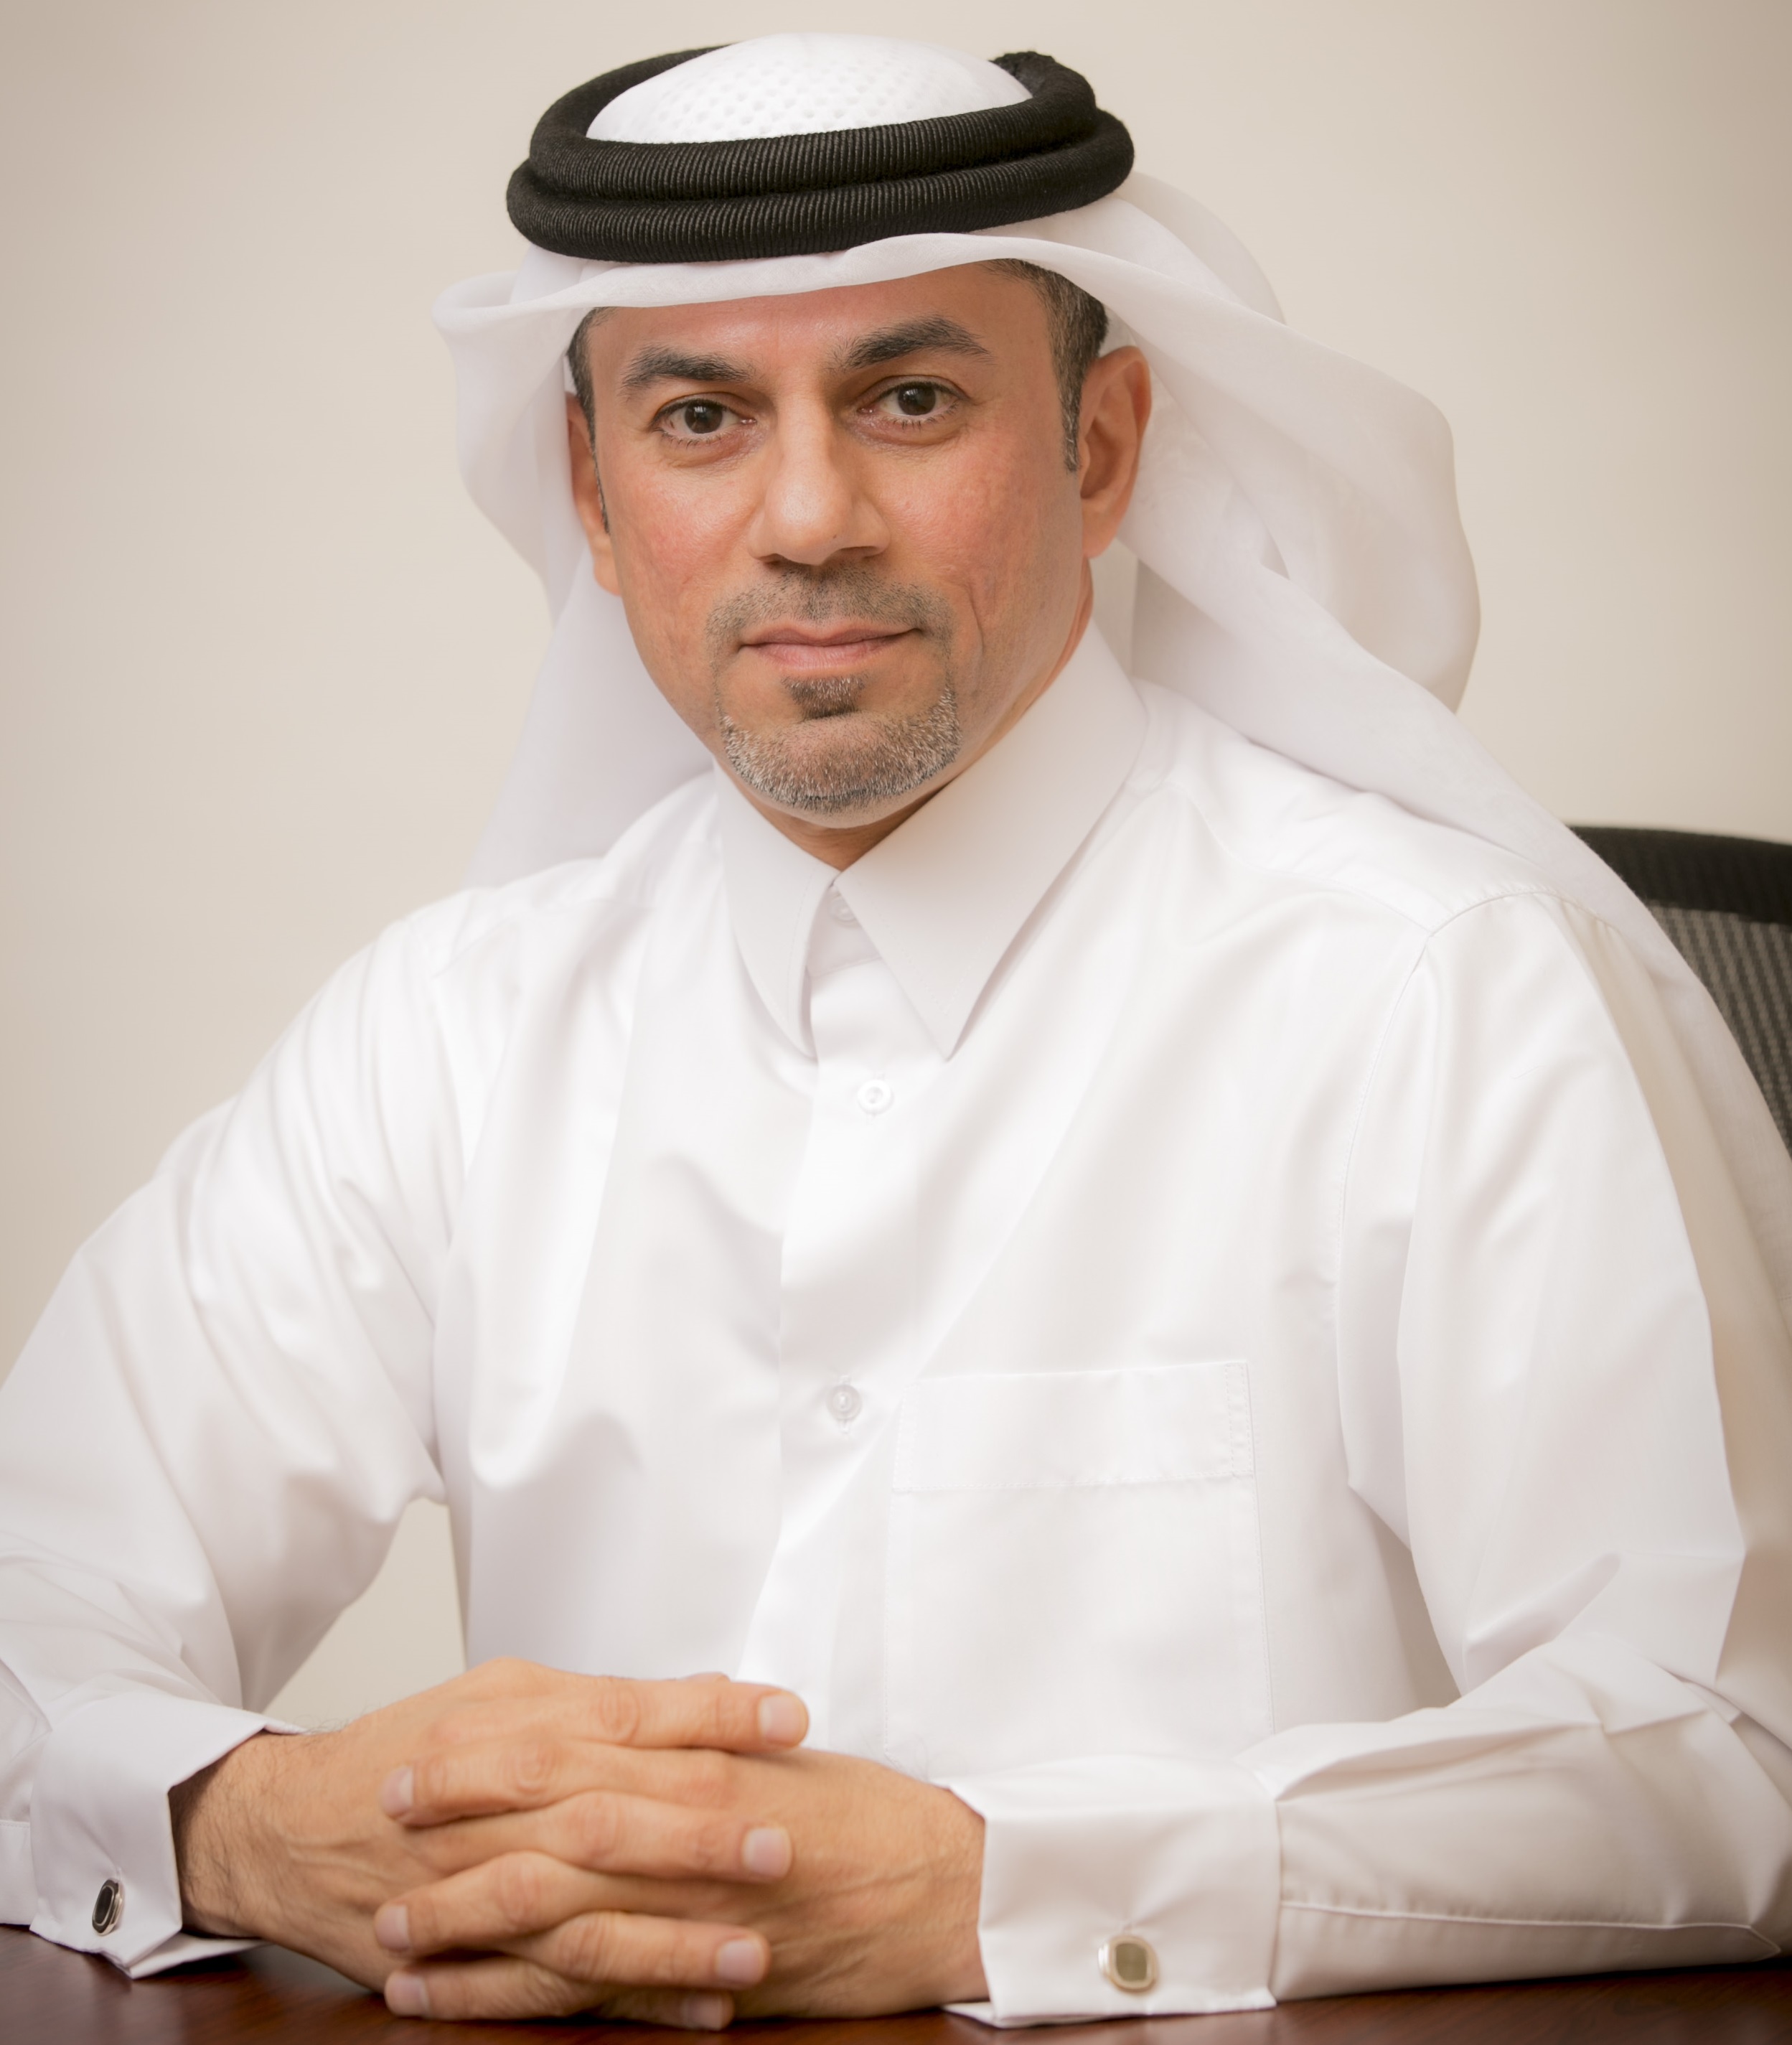 Mr. Abdulrahman Ali Al-Abdulla